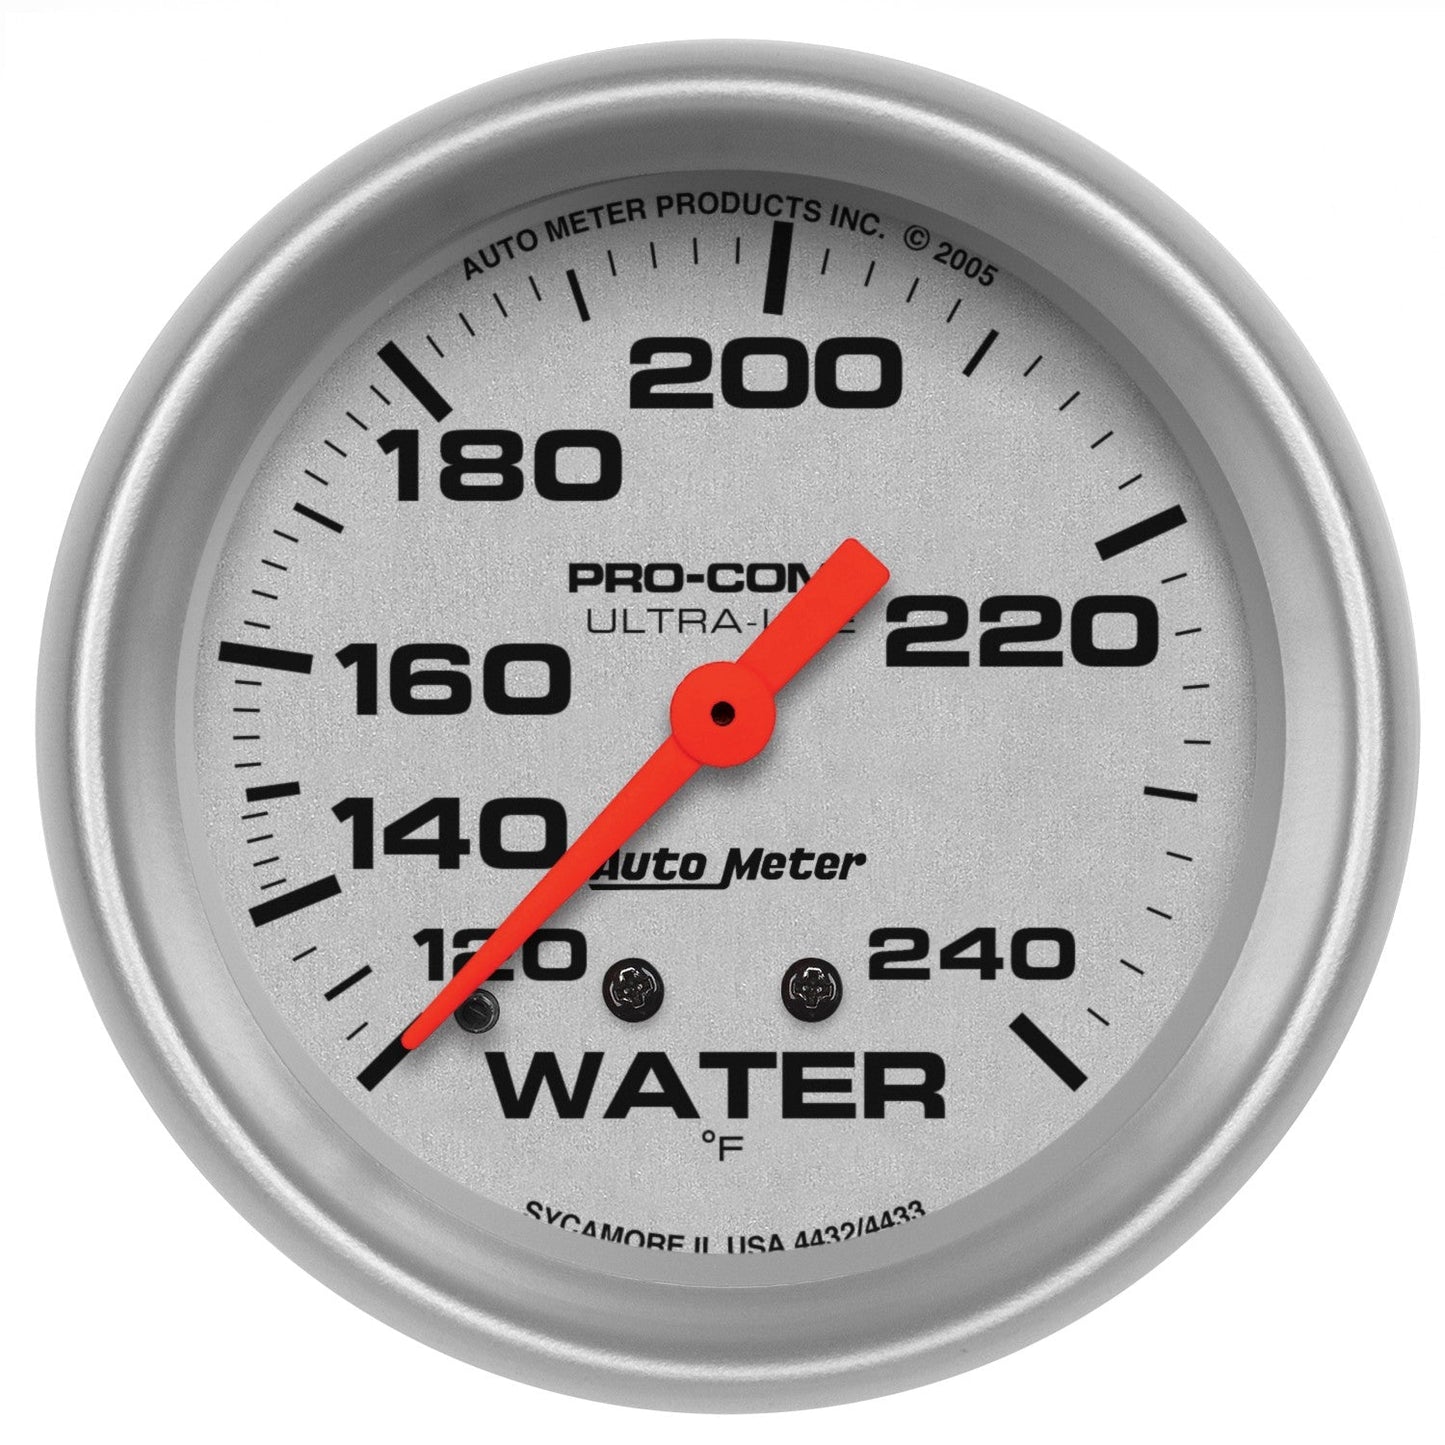 AutoMeter - 2-5/8" WATER TEMPERATURE, 120-240 °F, MECHANICAL, ULTRA-LITE (4432)